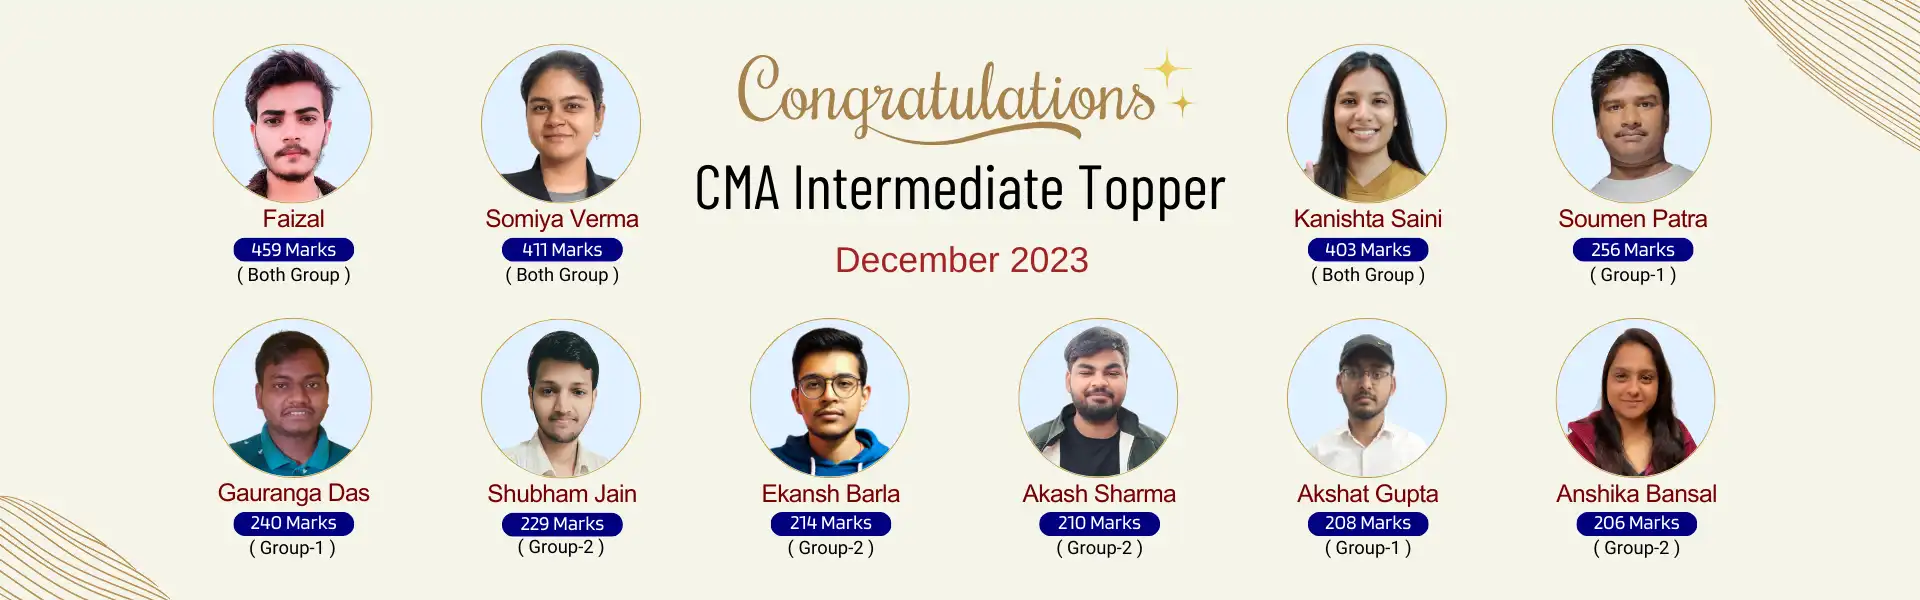 CMA Intermediate Topper December 2023